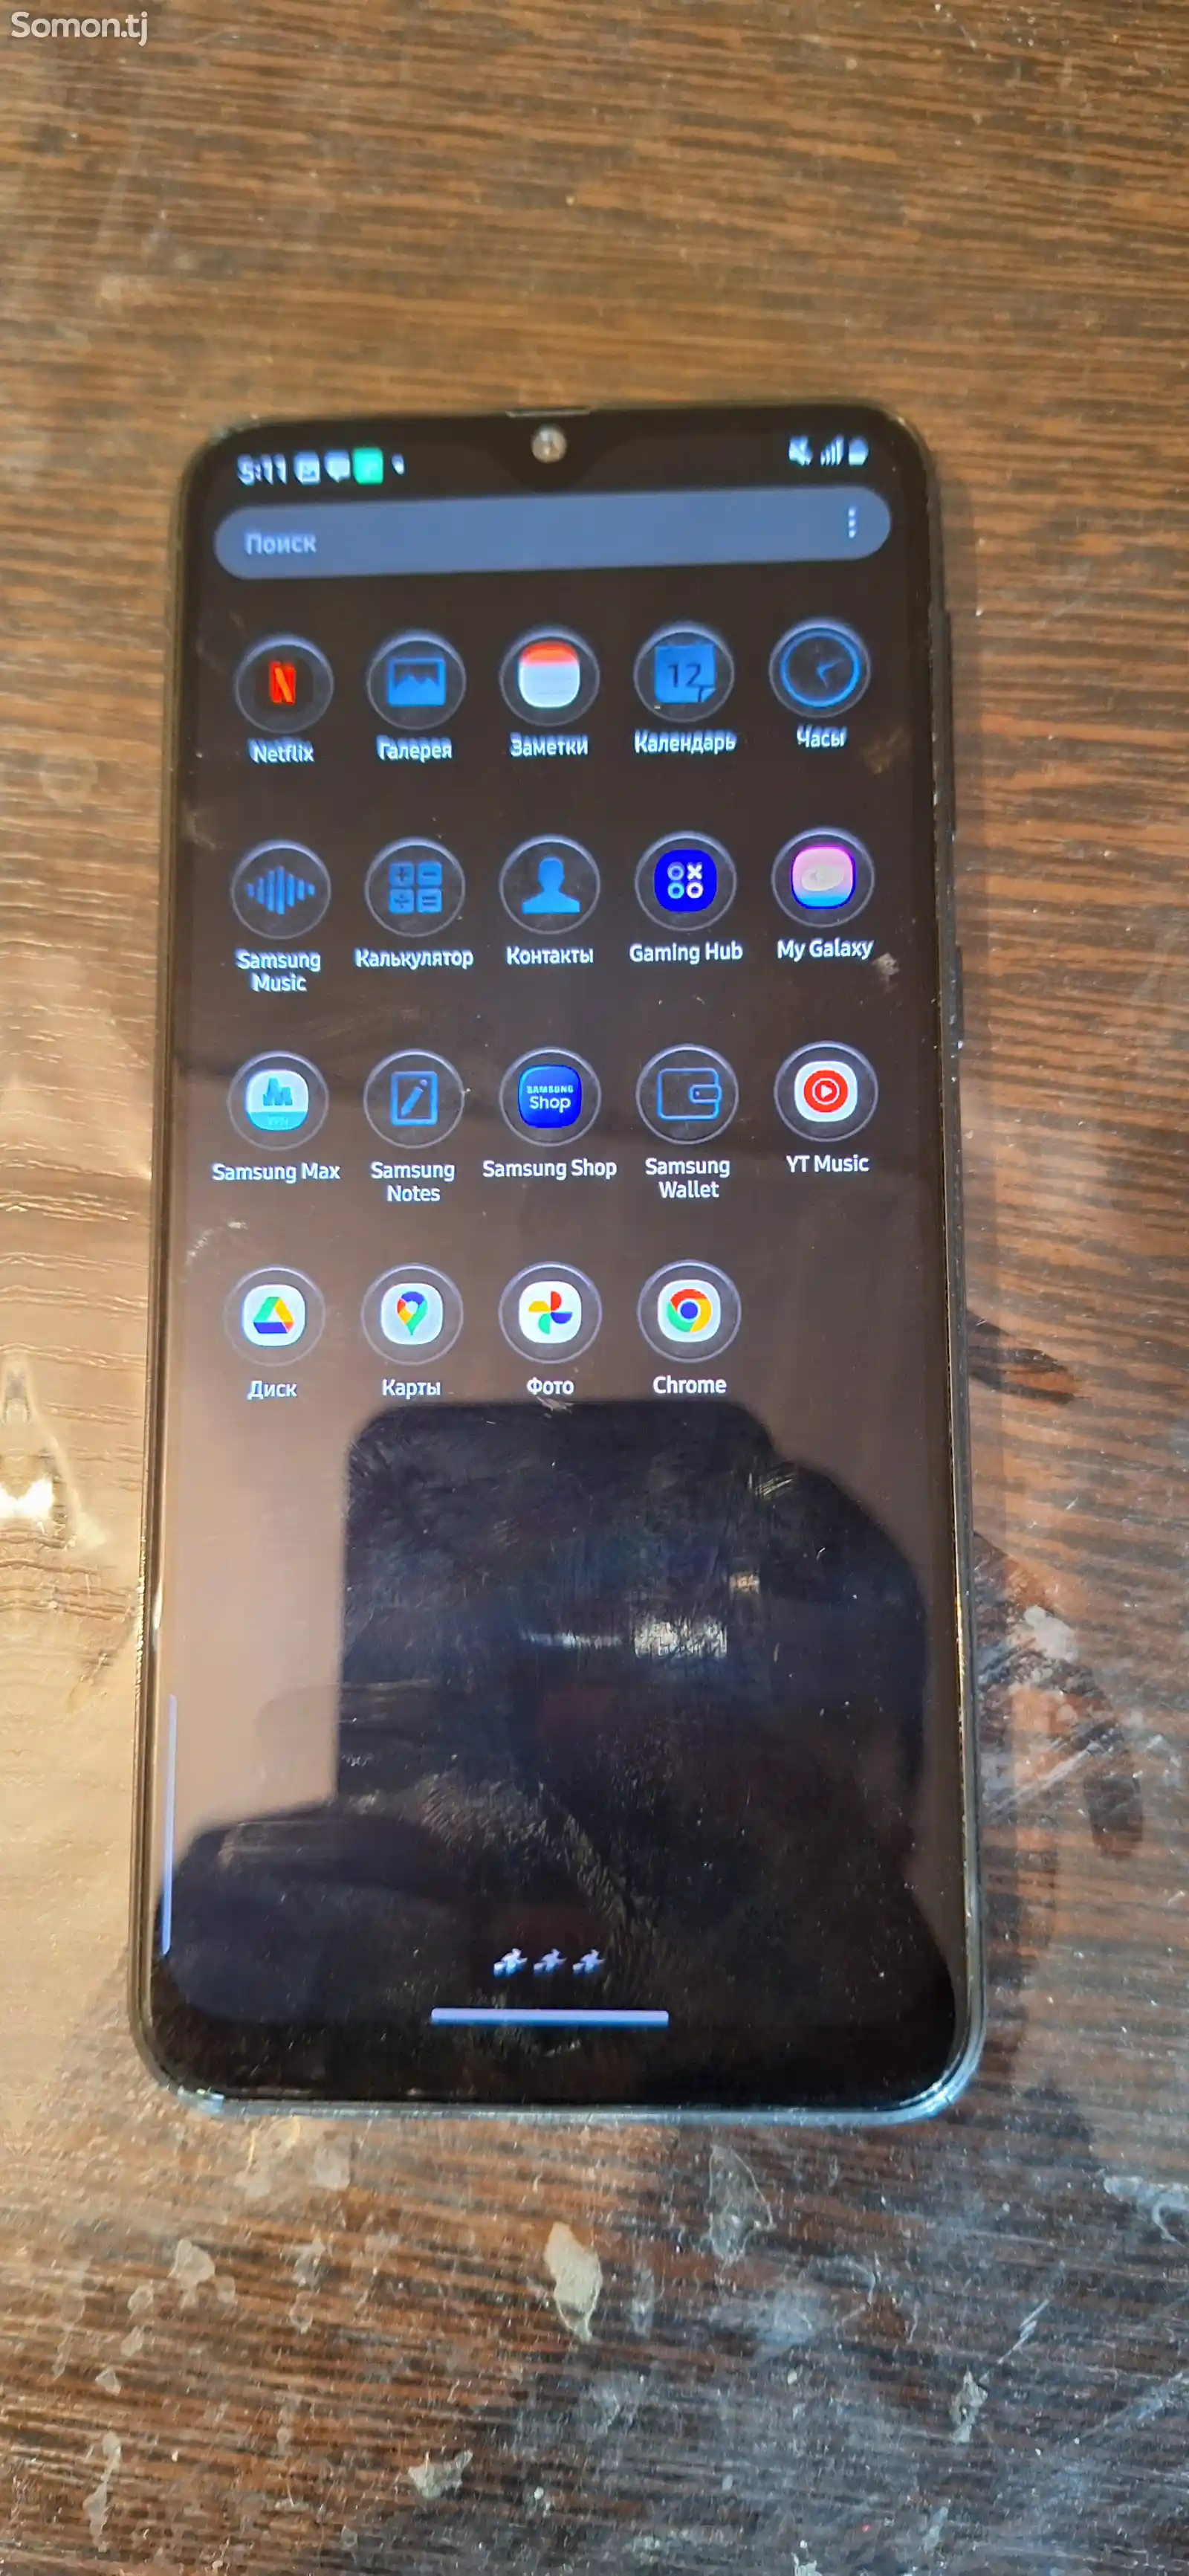 Samsung Galaxy M31-3